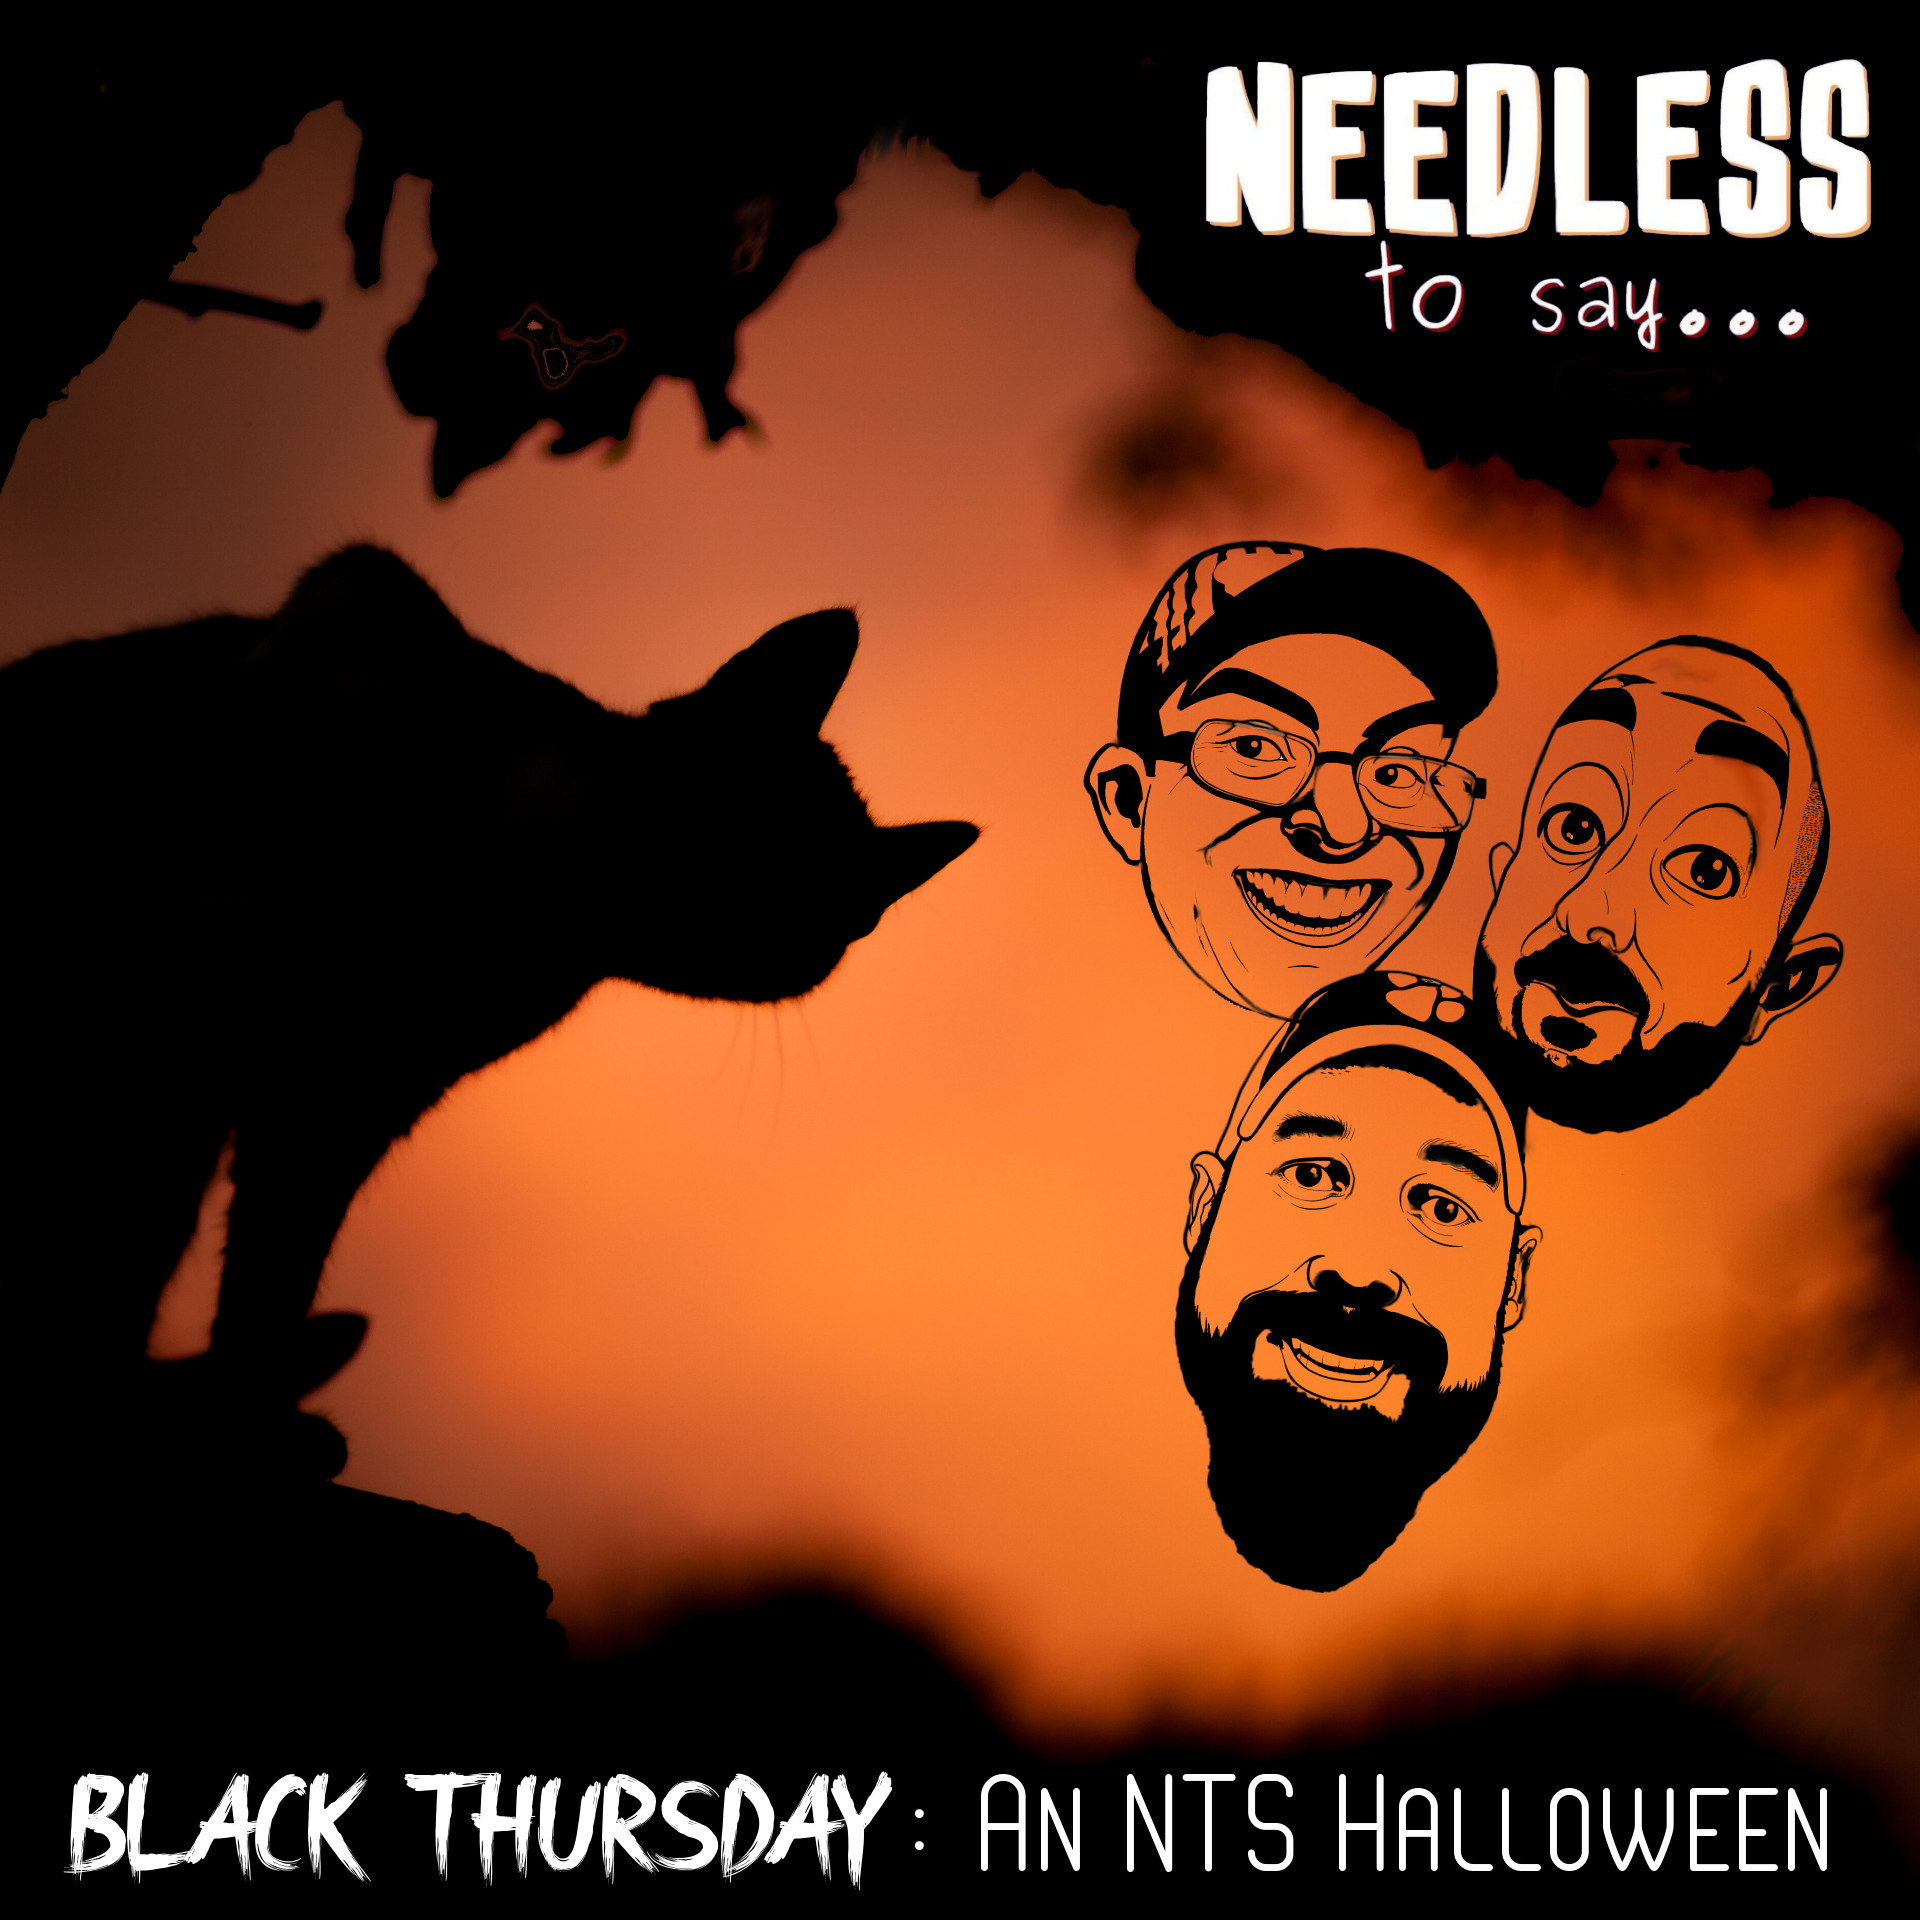 Black Thursday: An NTS Halloween